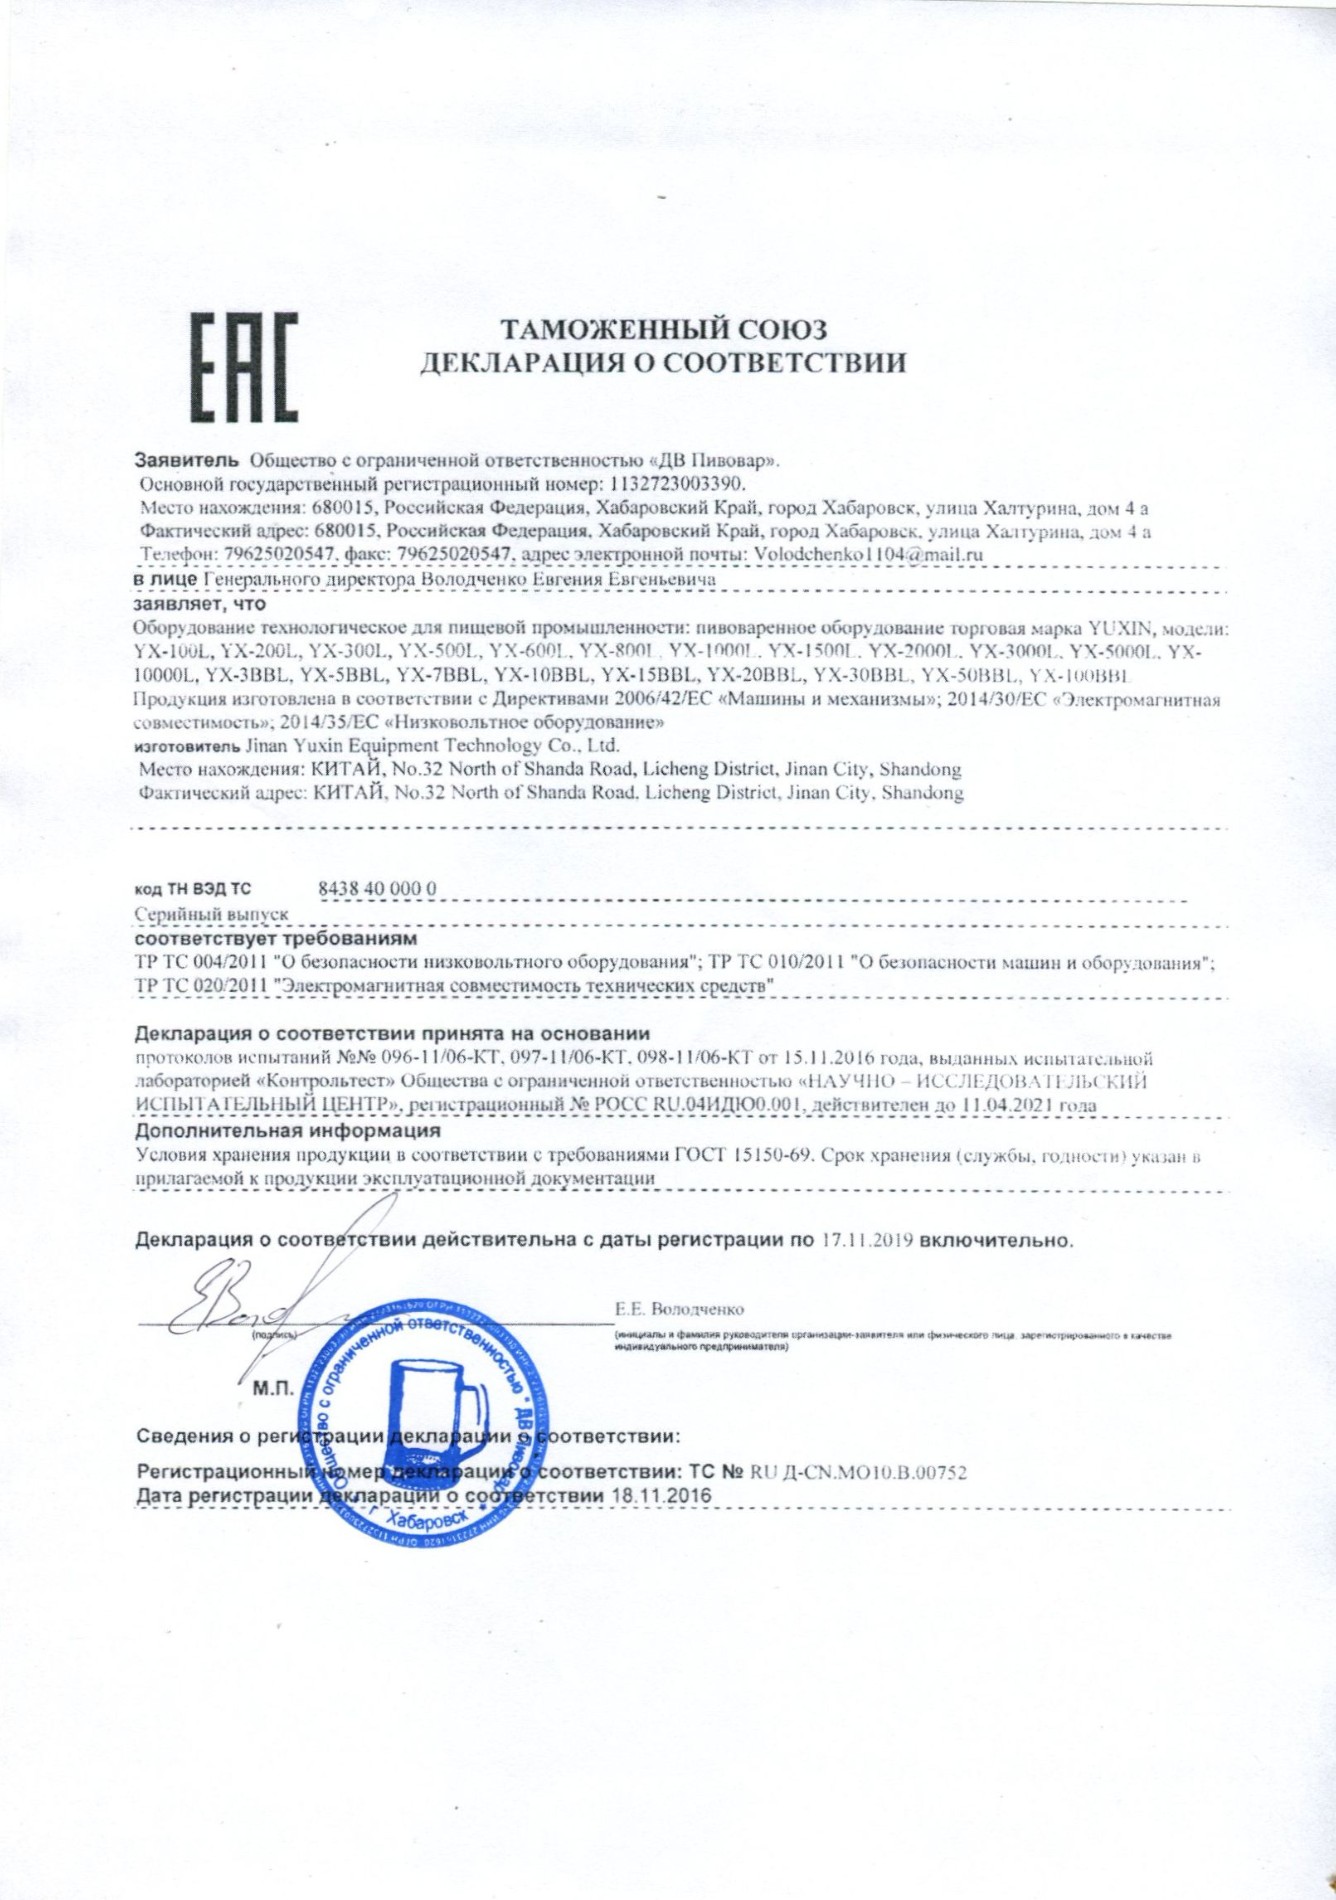 Сертификат EAC